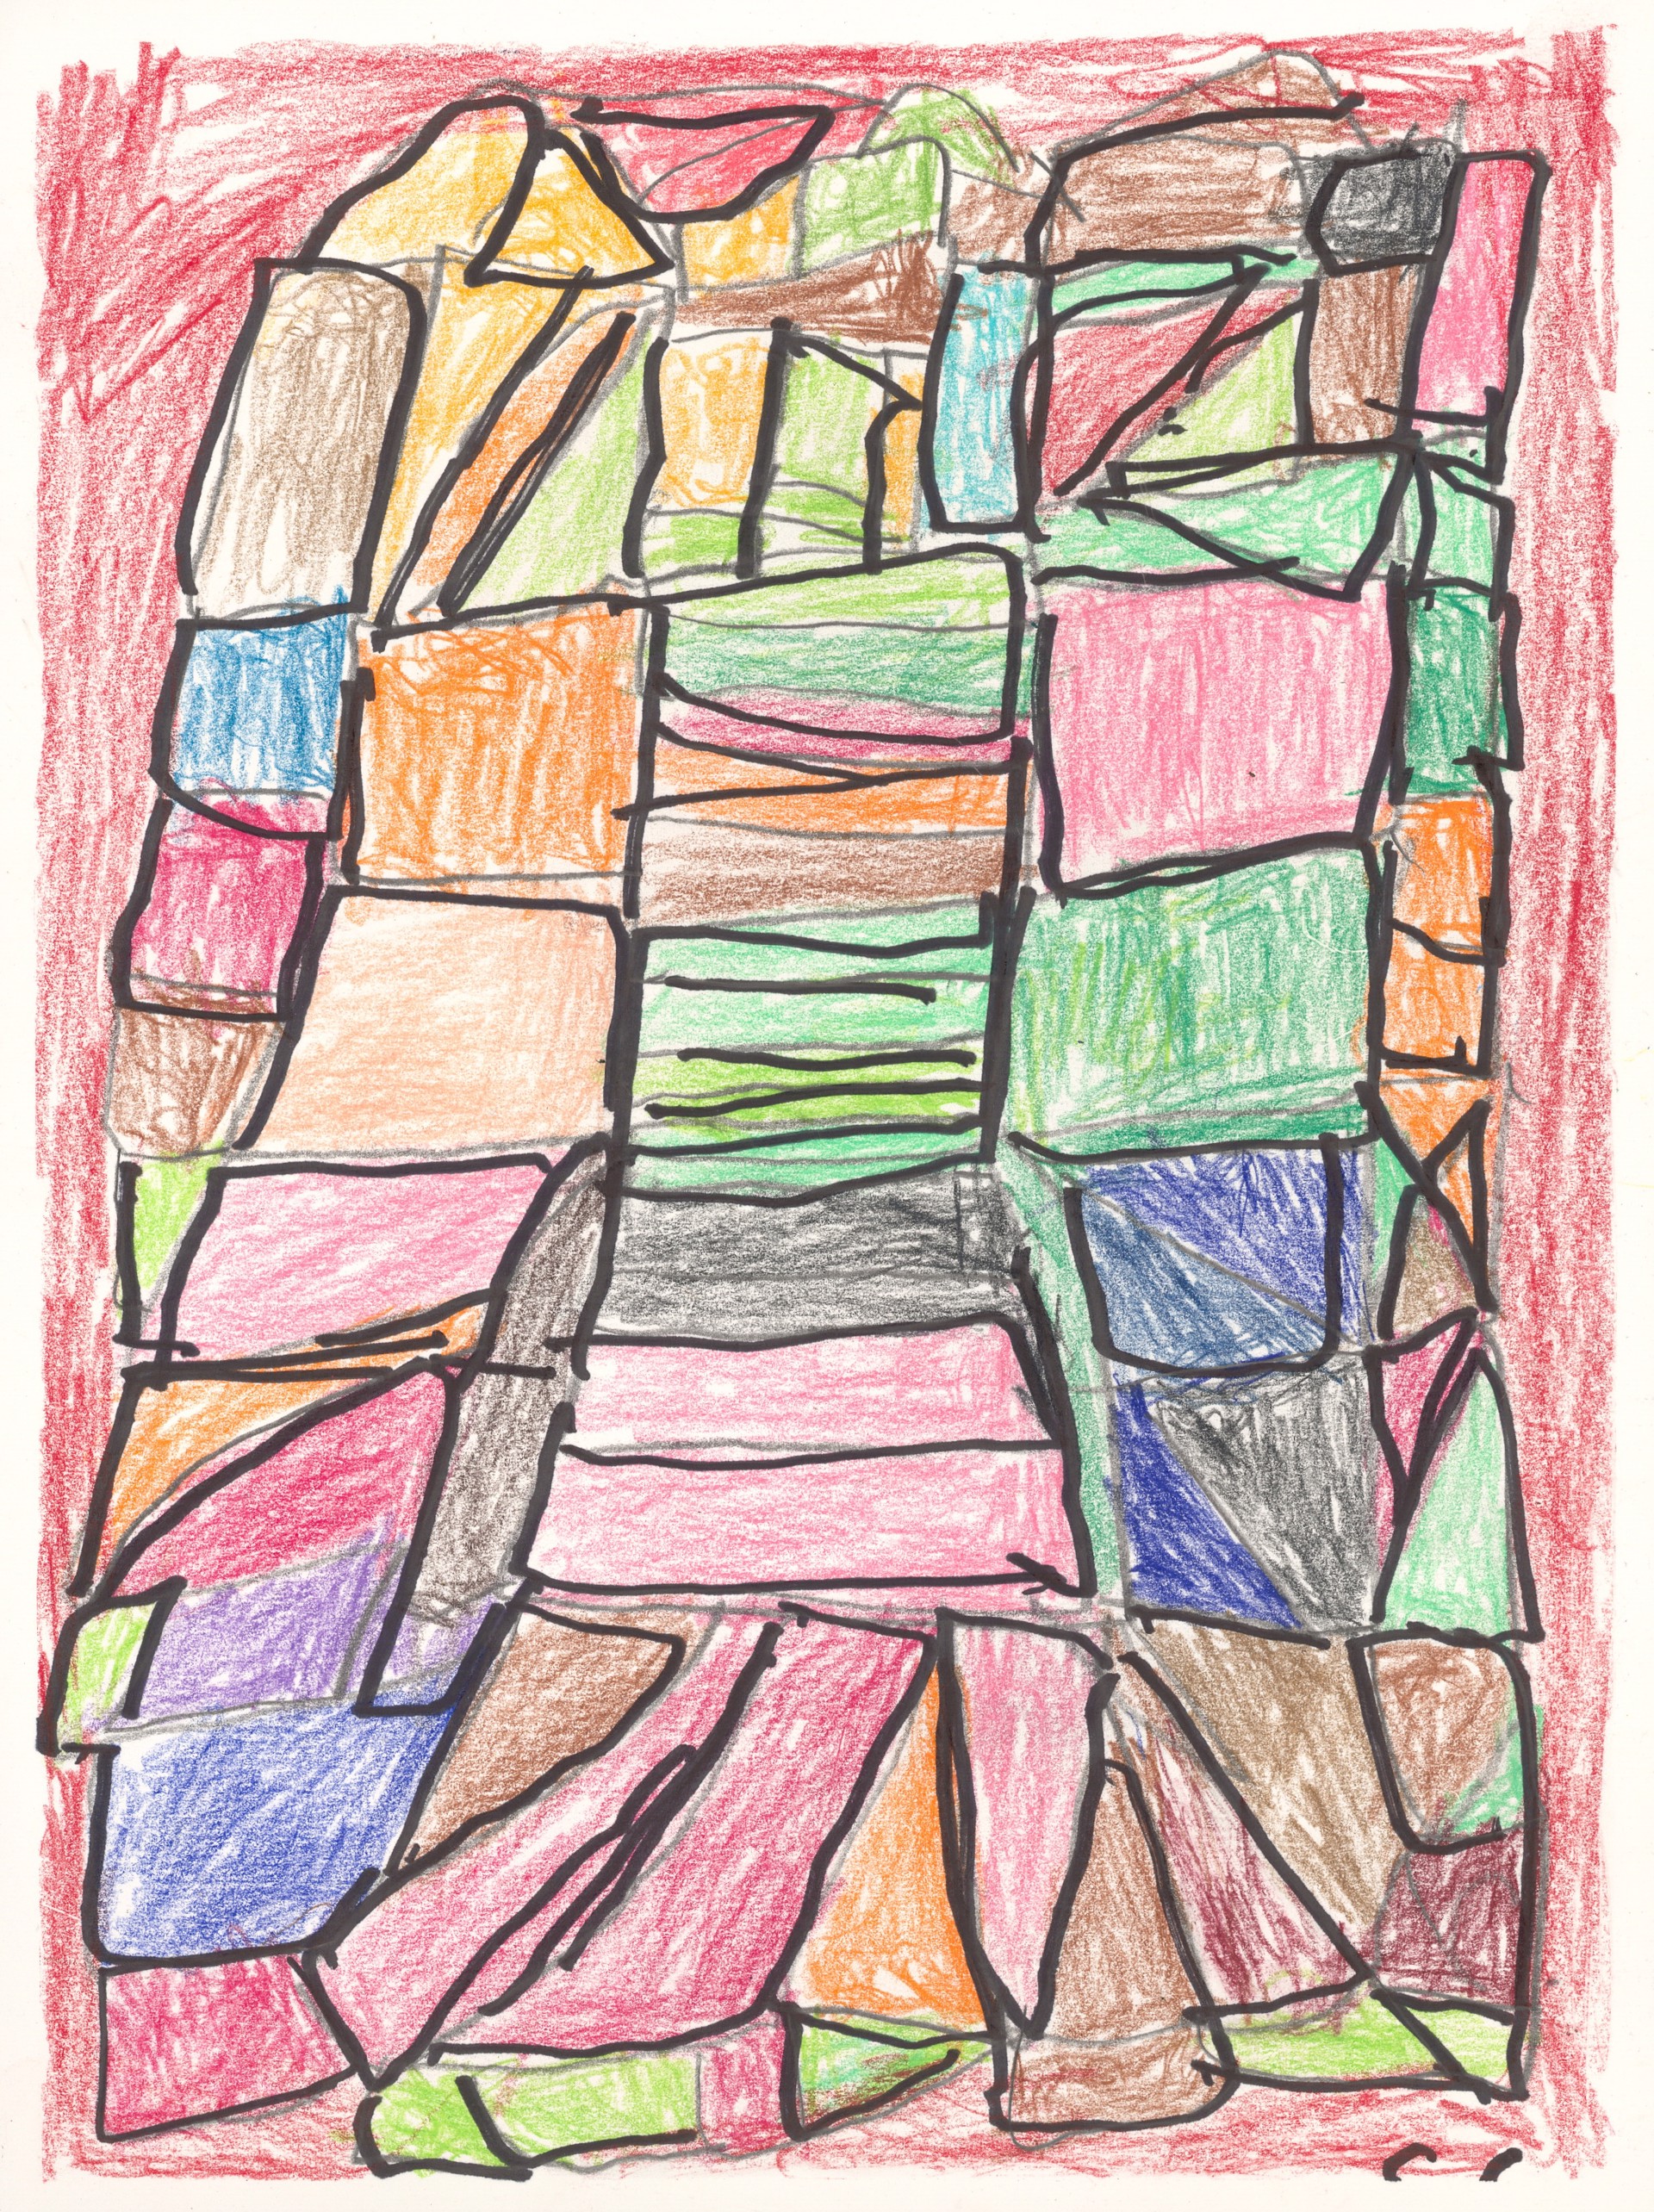 Tower of Blocks by Calvin "Sonny" Clarke